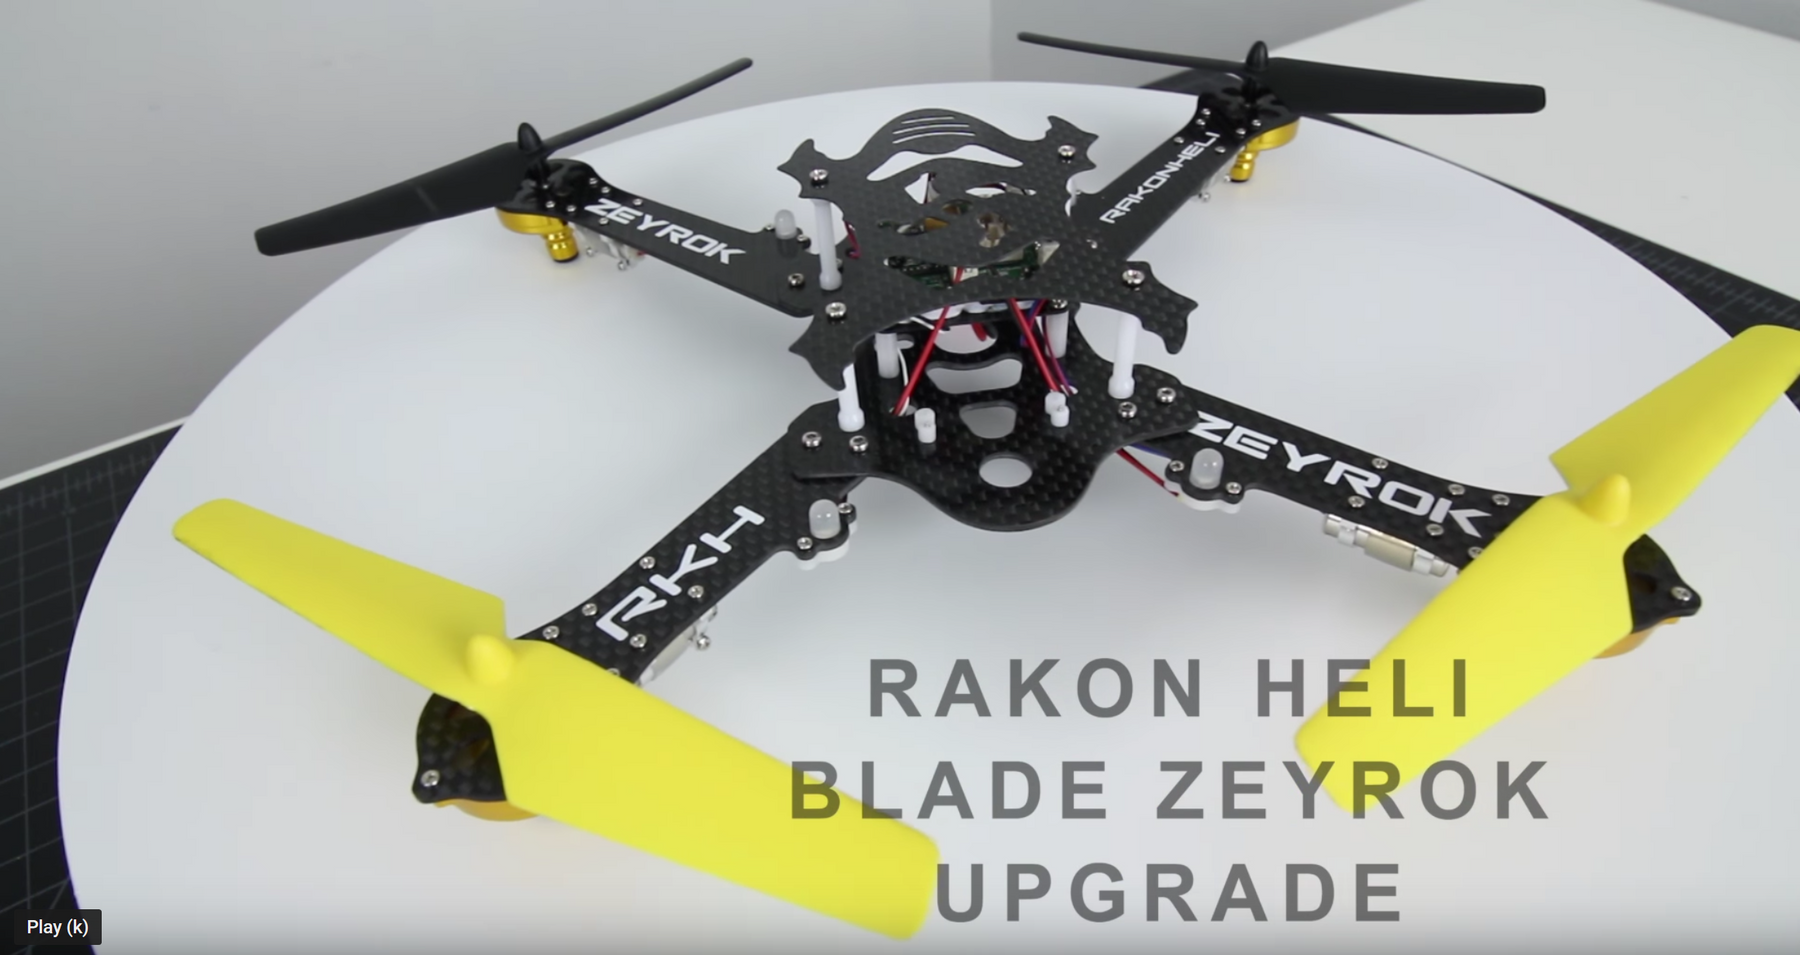 [Drone Camps RC] BLADE ZEYROK - CARBON FIBER Upgrade and Flight Test